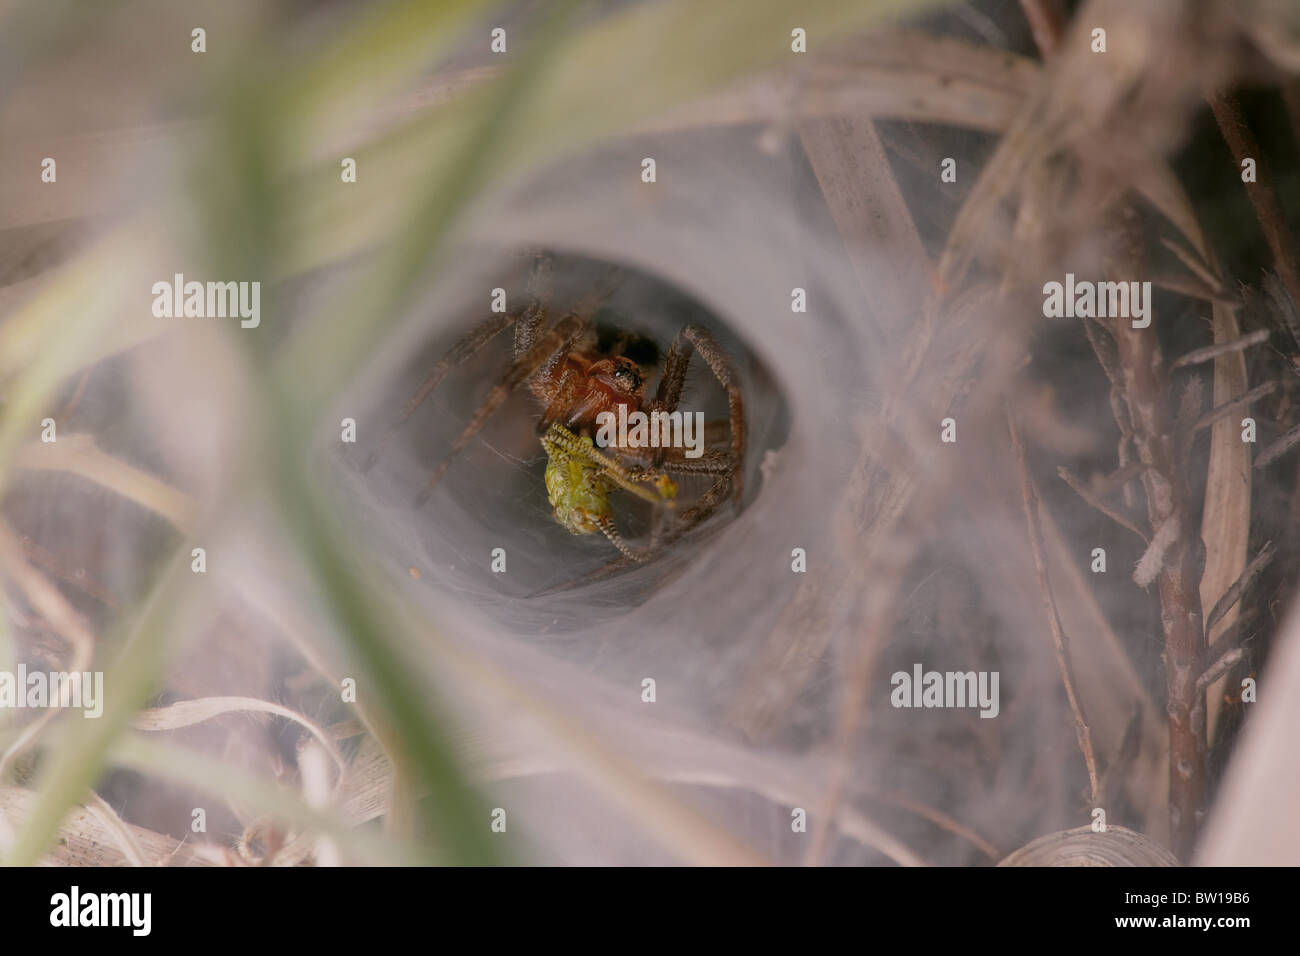 Embudo o web Agelenidae araña en su funnel web con presas, Dorset, Reino Unido Foto de stock